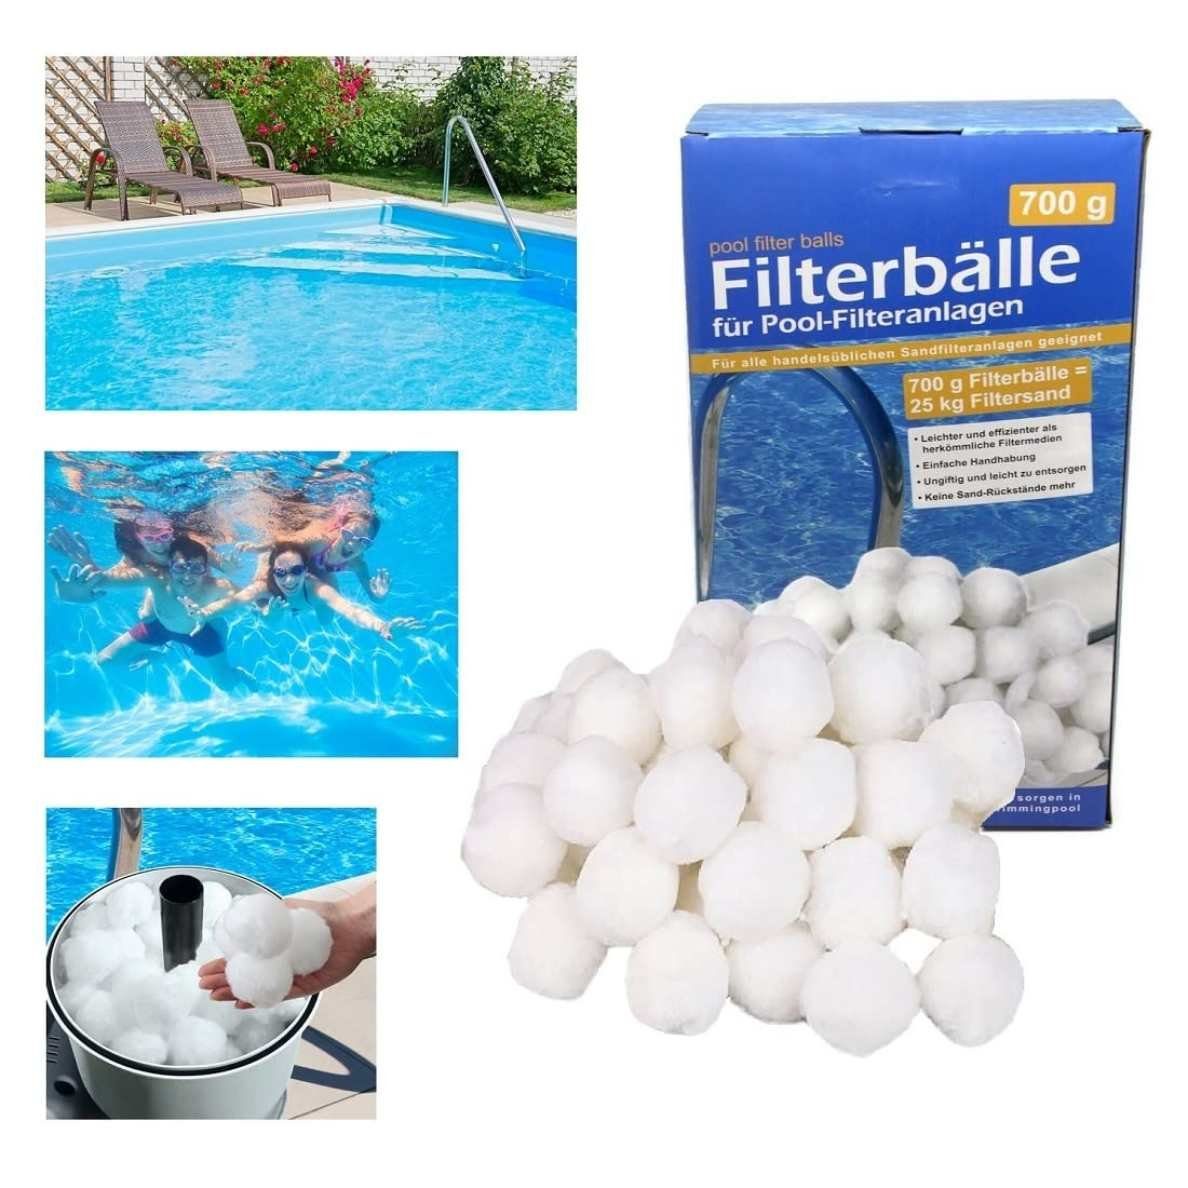 Bada Bing Filterbälle Filterbälle Filter Balls für Poolfilteranlagen, für  Pool-Filteranlagen, Sandfilteranlagen, 0,7 kg, 100 % recyclebar, waschbar,  wiederverwendbar